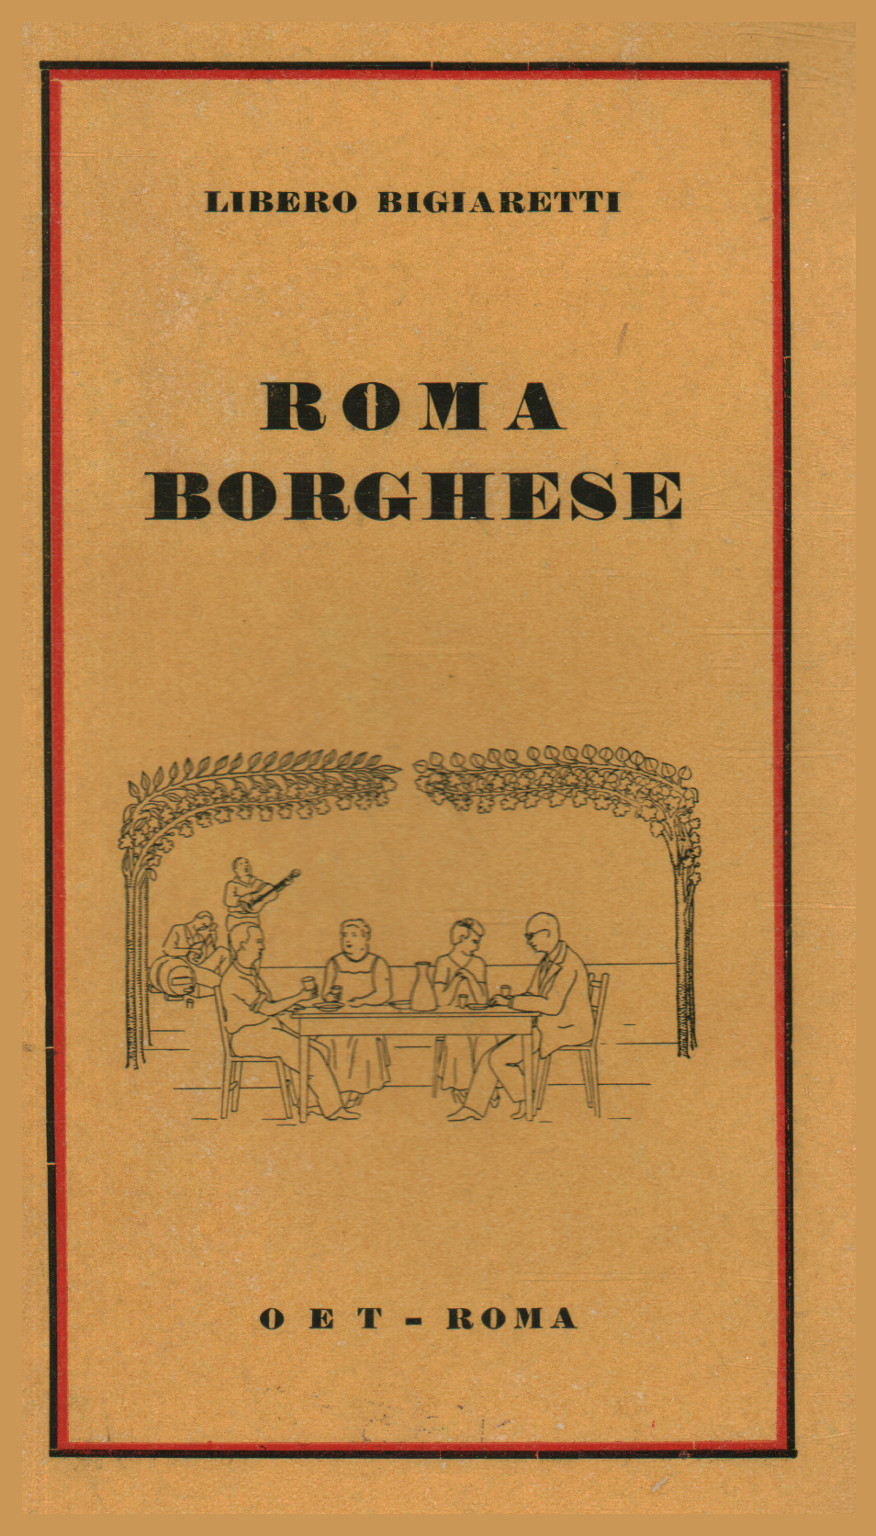 Rome, borghese's.a.